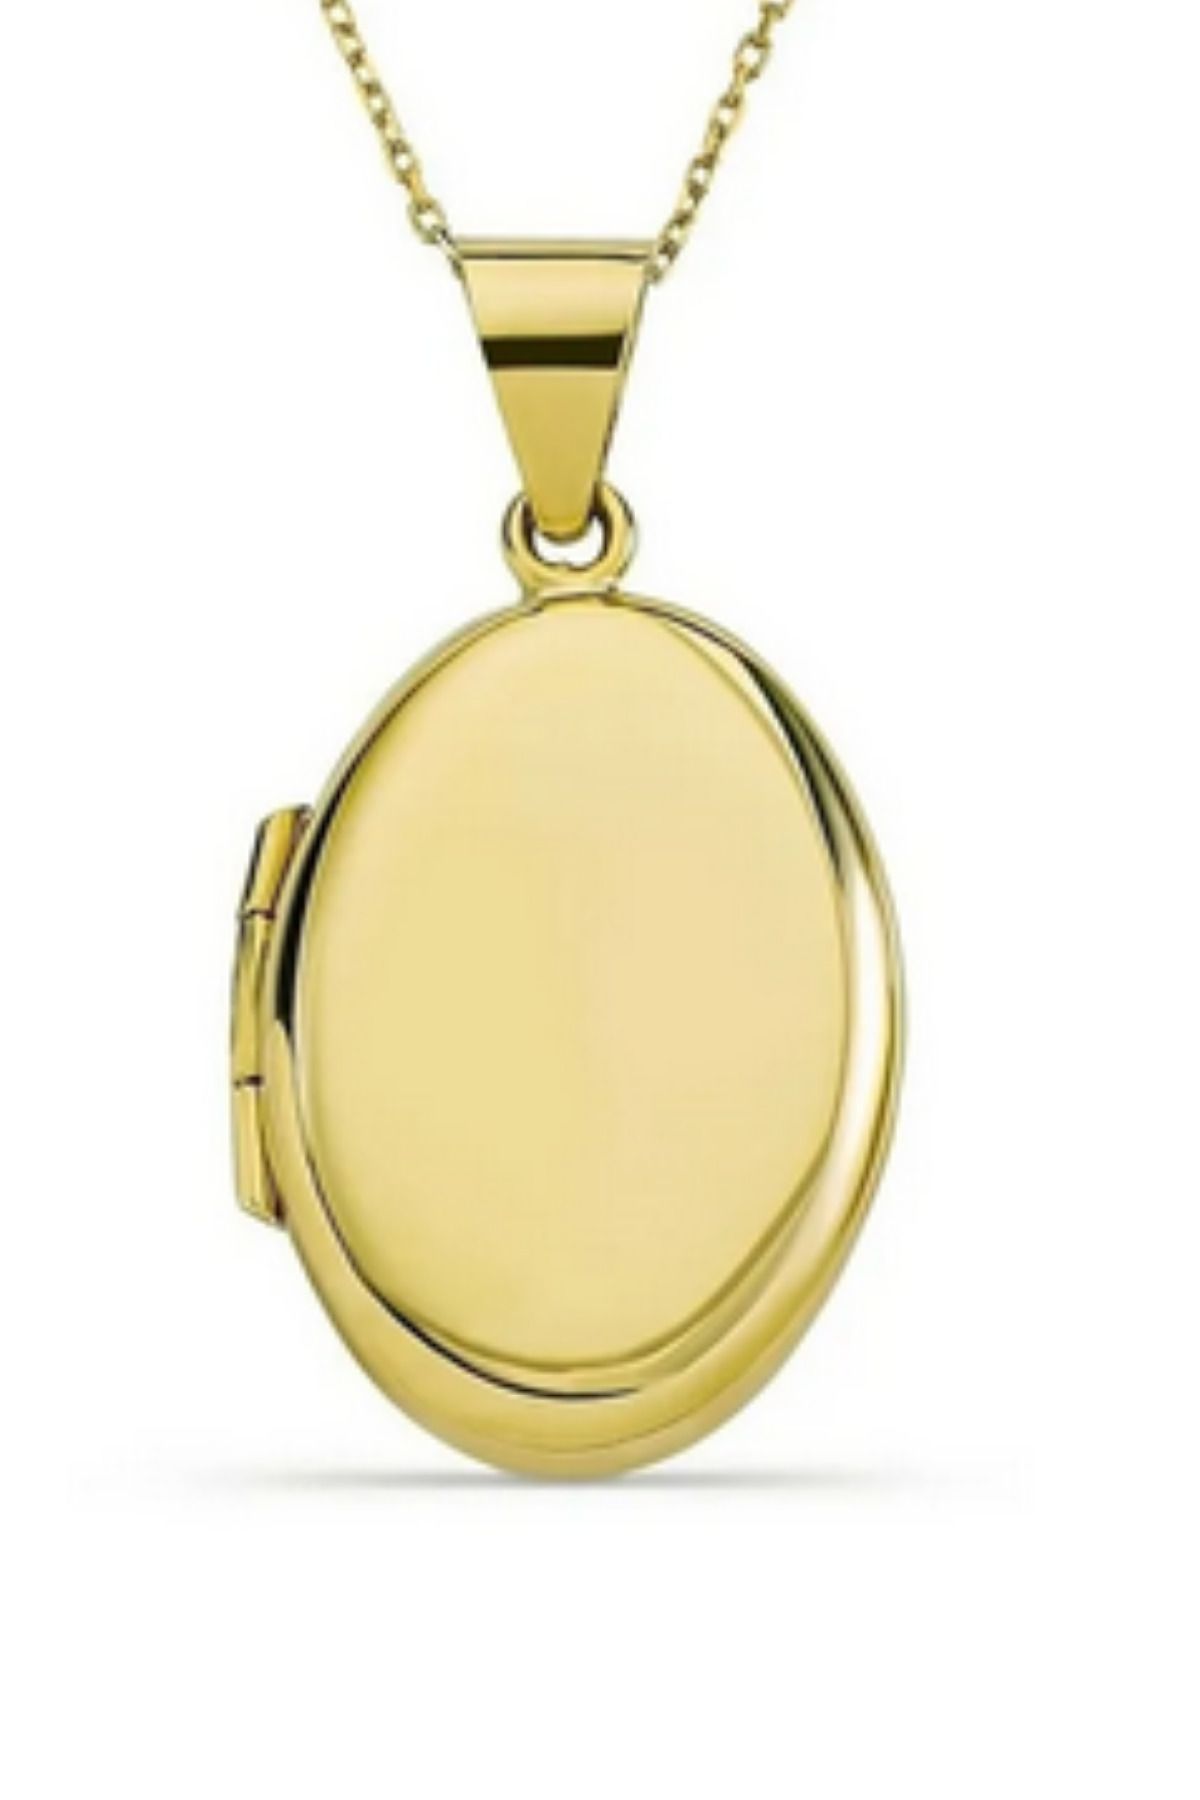 Nilvera Kuyumculuk 14 Ayar Altın Oval Resimli Kapaklı Madalyon Kolye Ucu